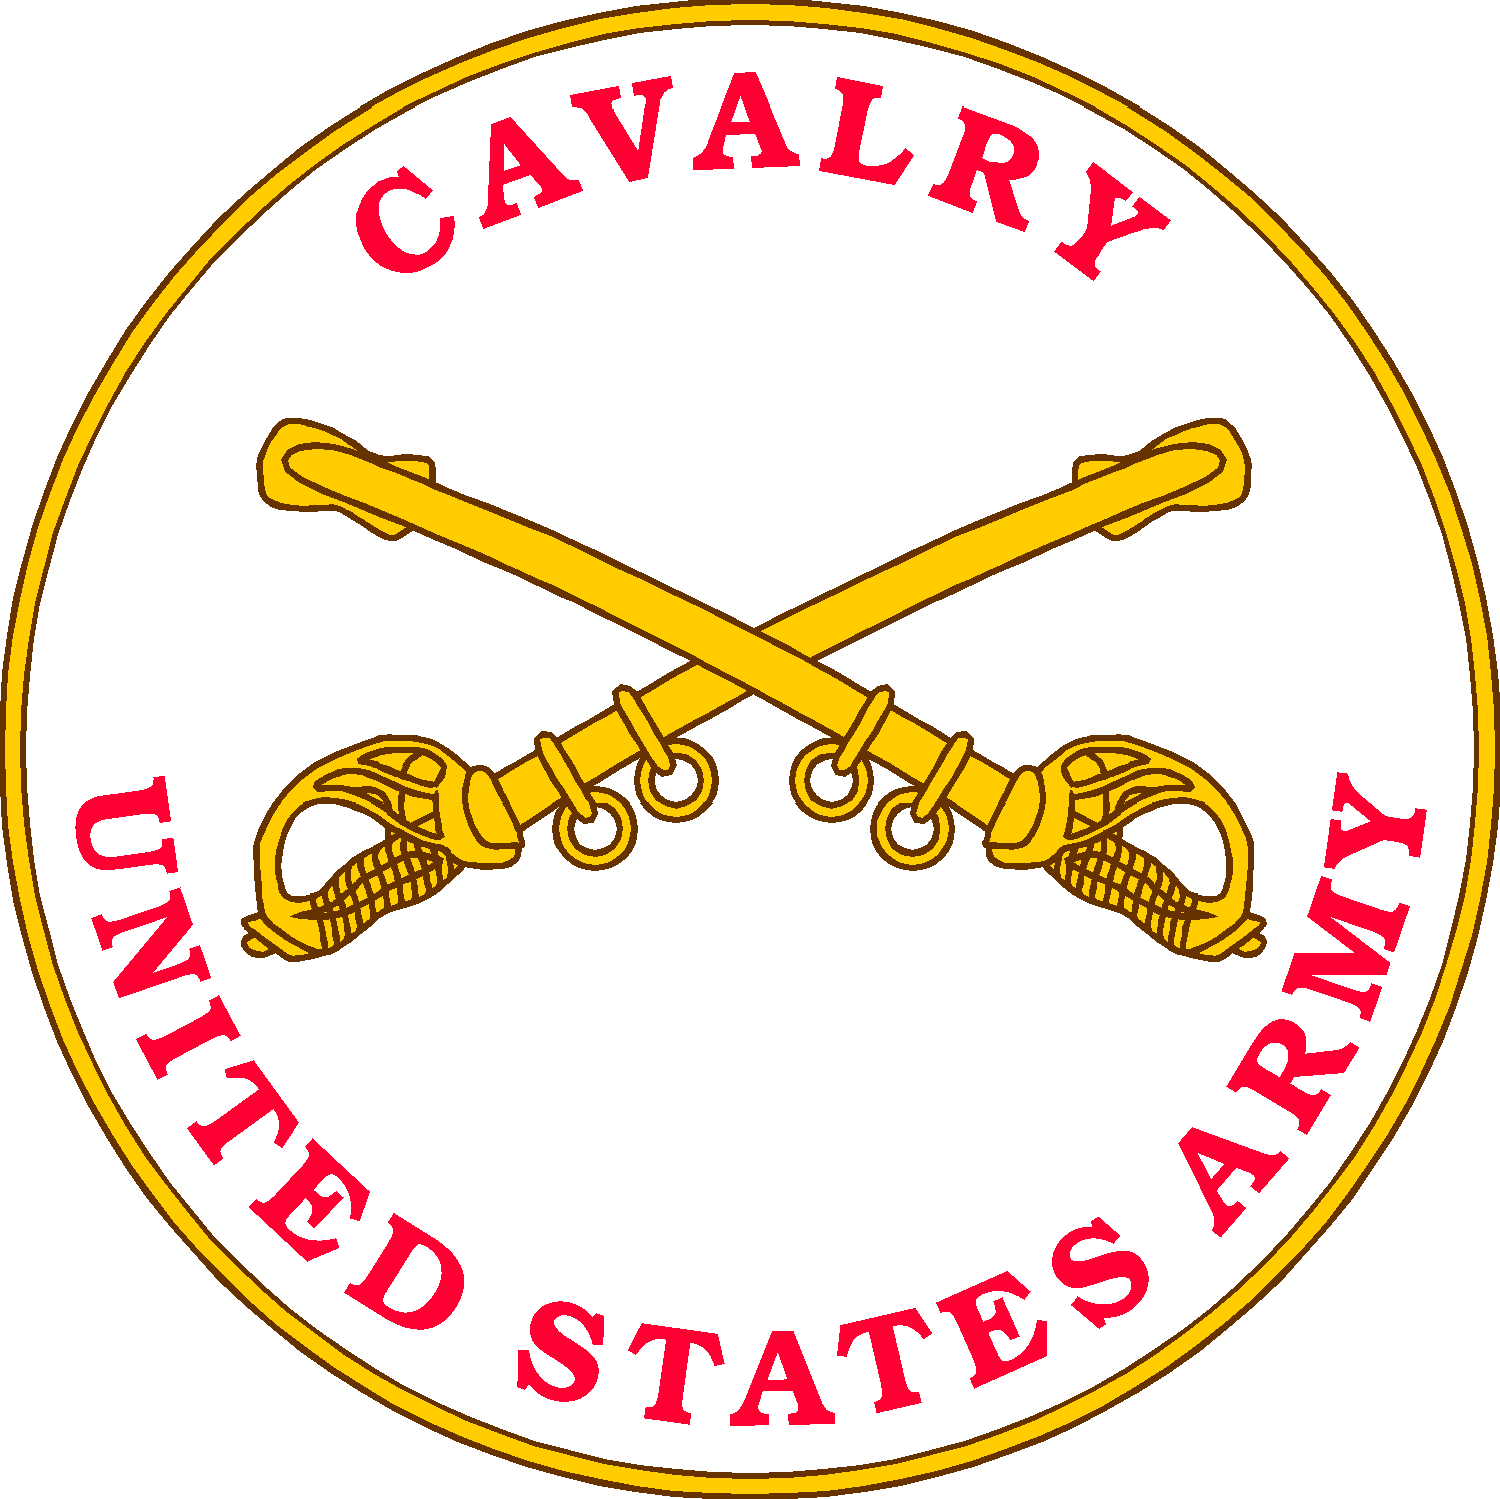 US Army Cavalry Insignia